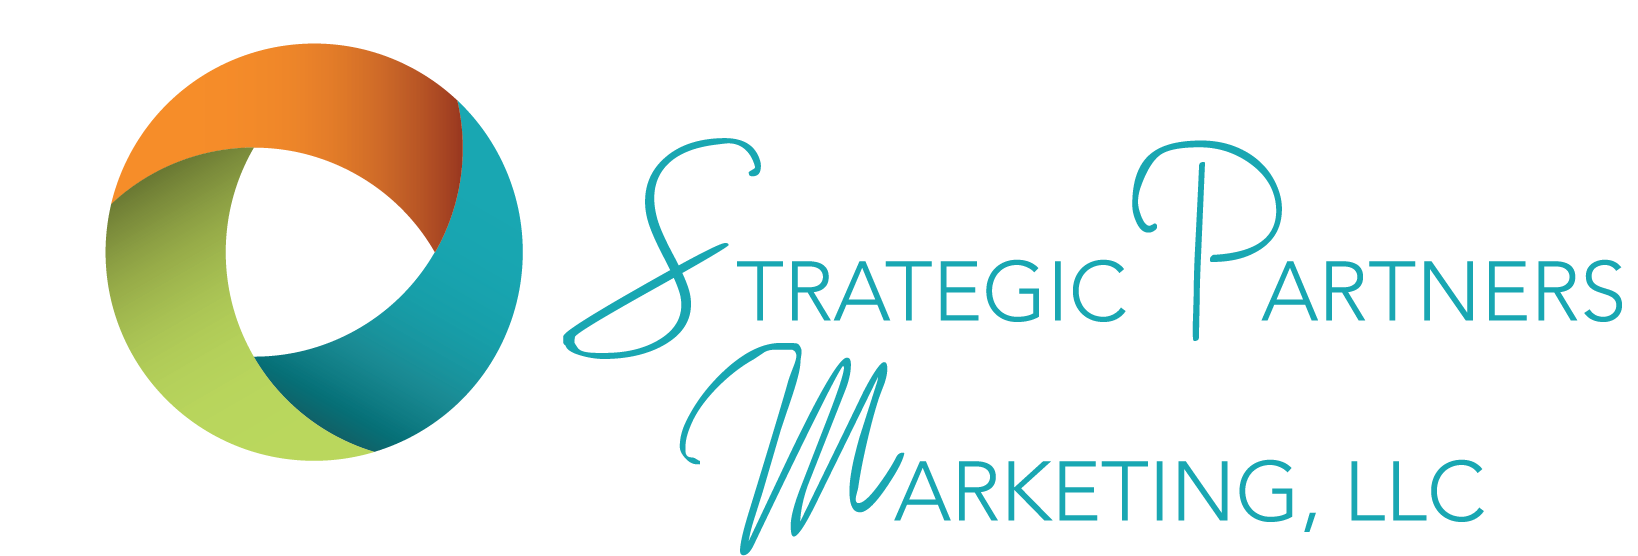 Strategic Partners Marketing, LLC